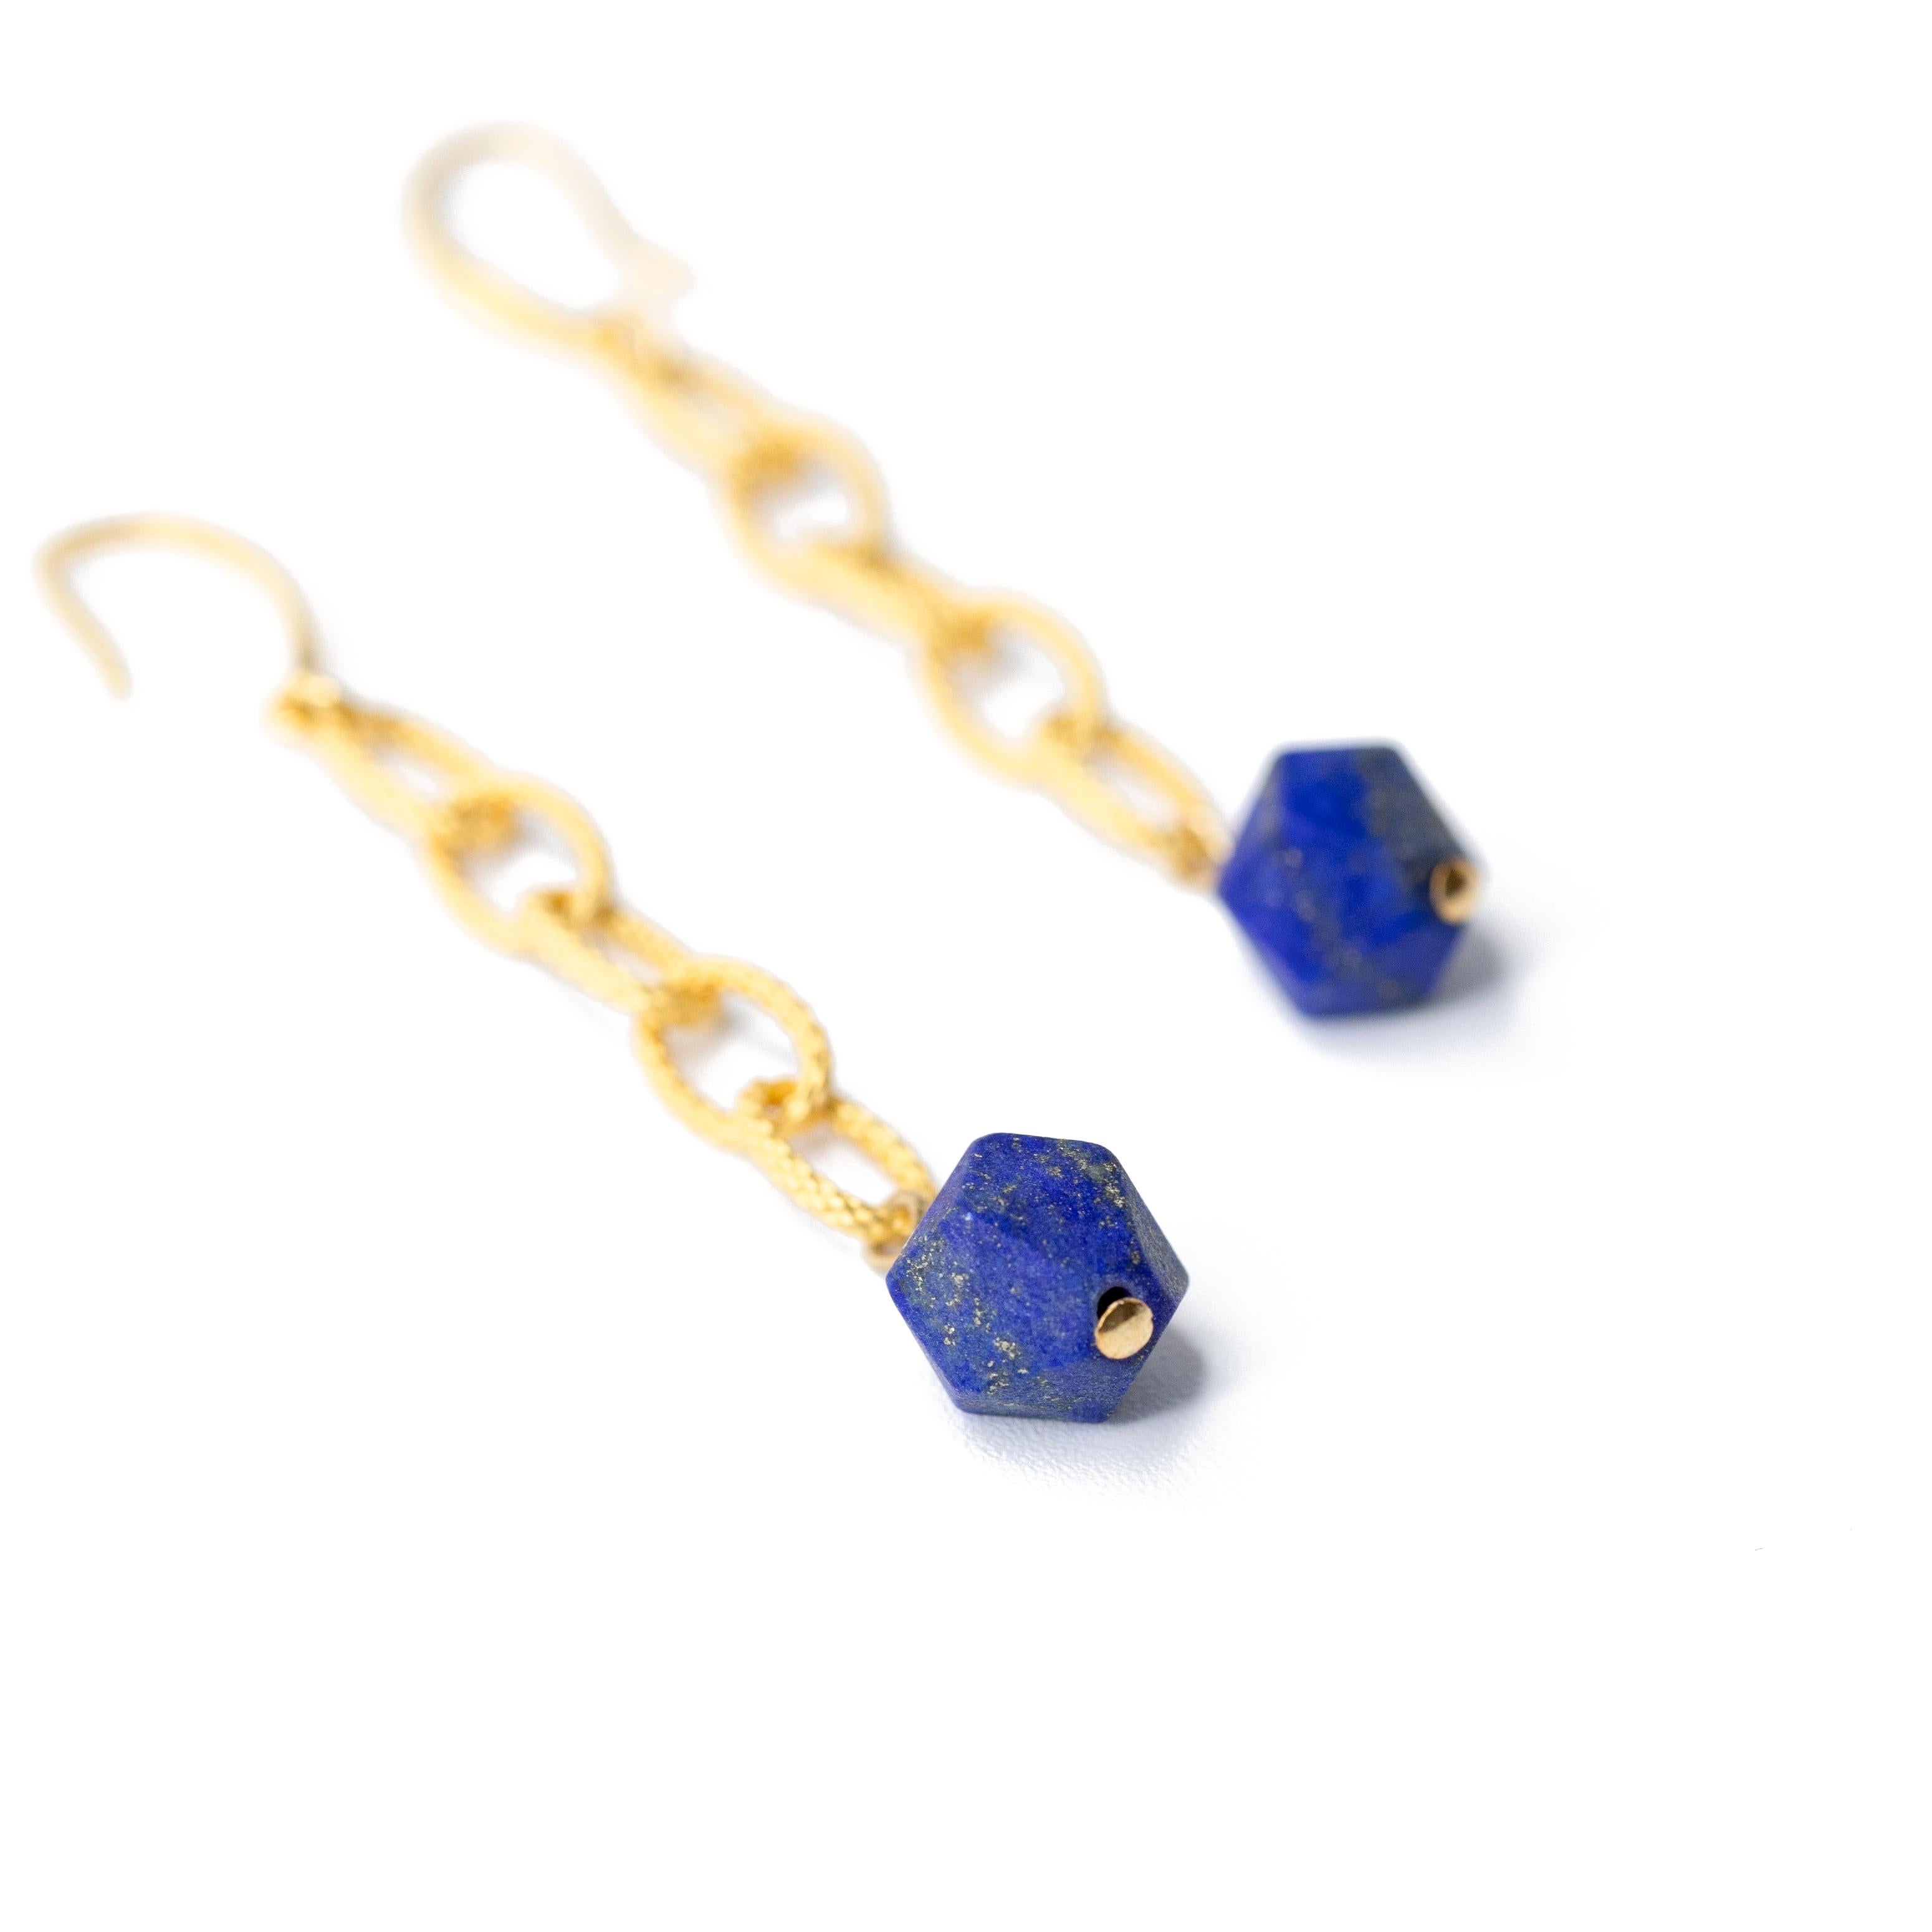 Artisan Lapis Lazuli Earring - Blue Madrid Earrings by Bombyx House For Sale